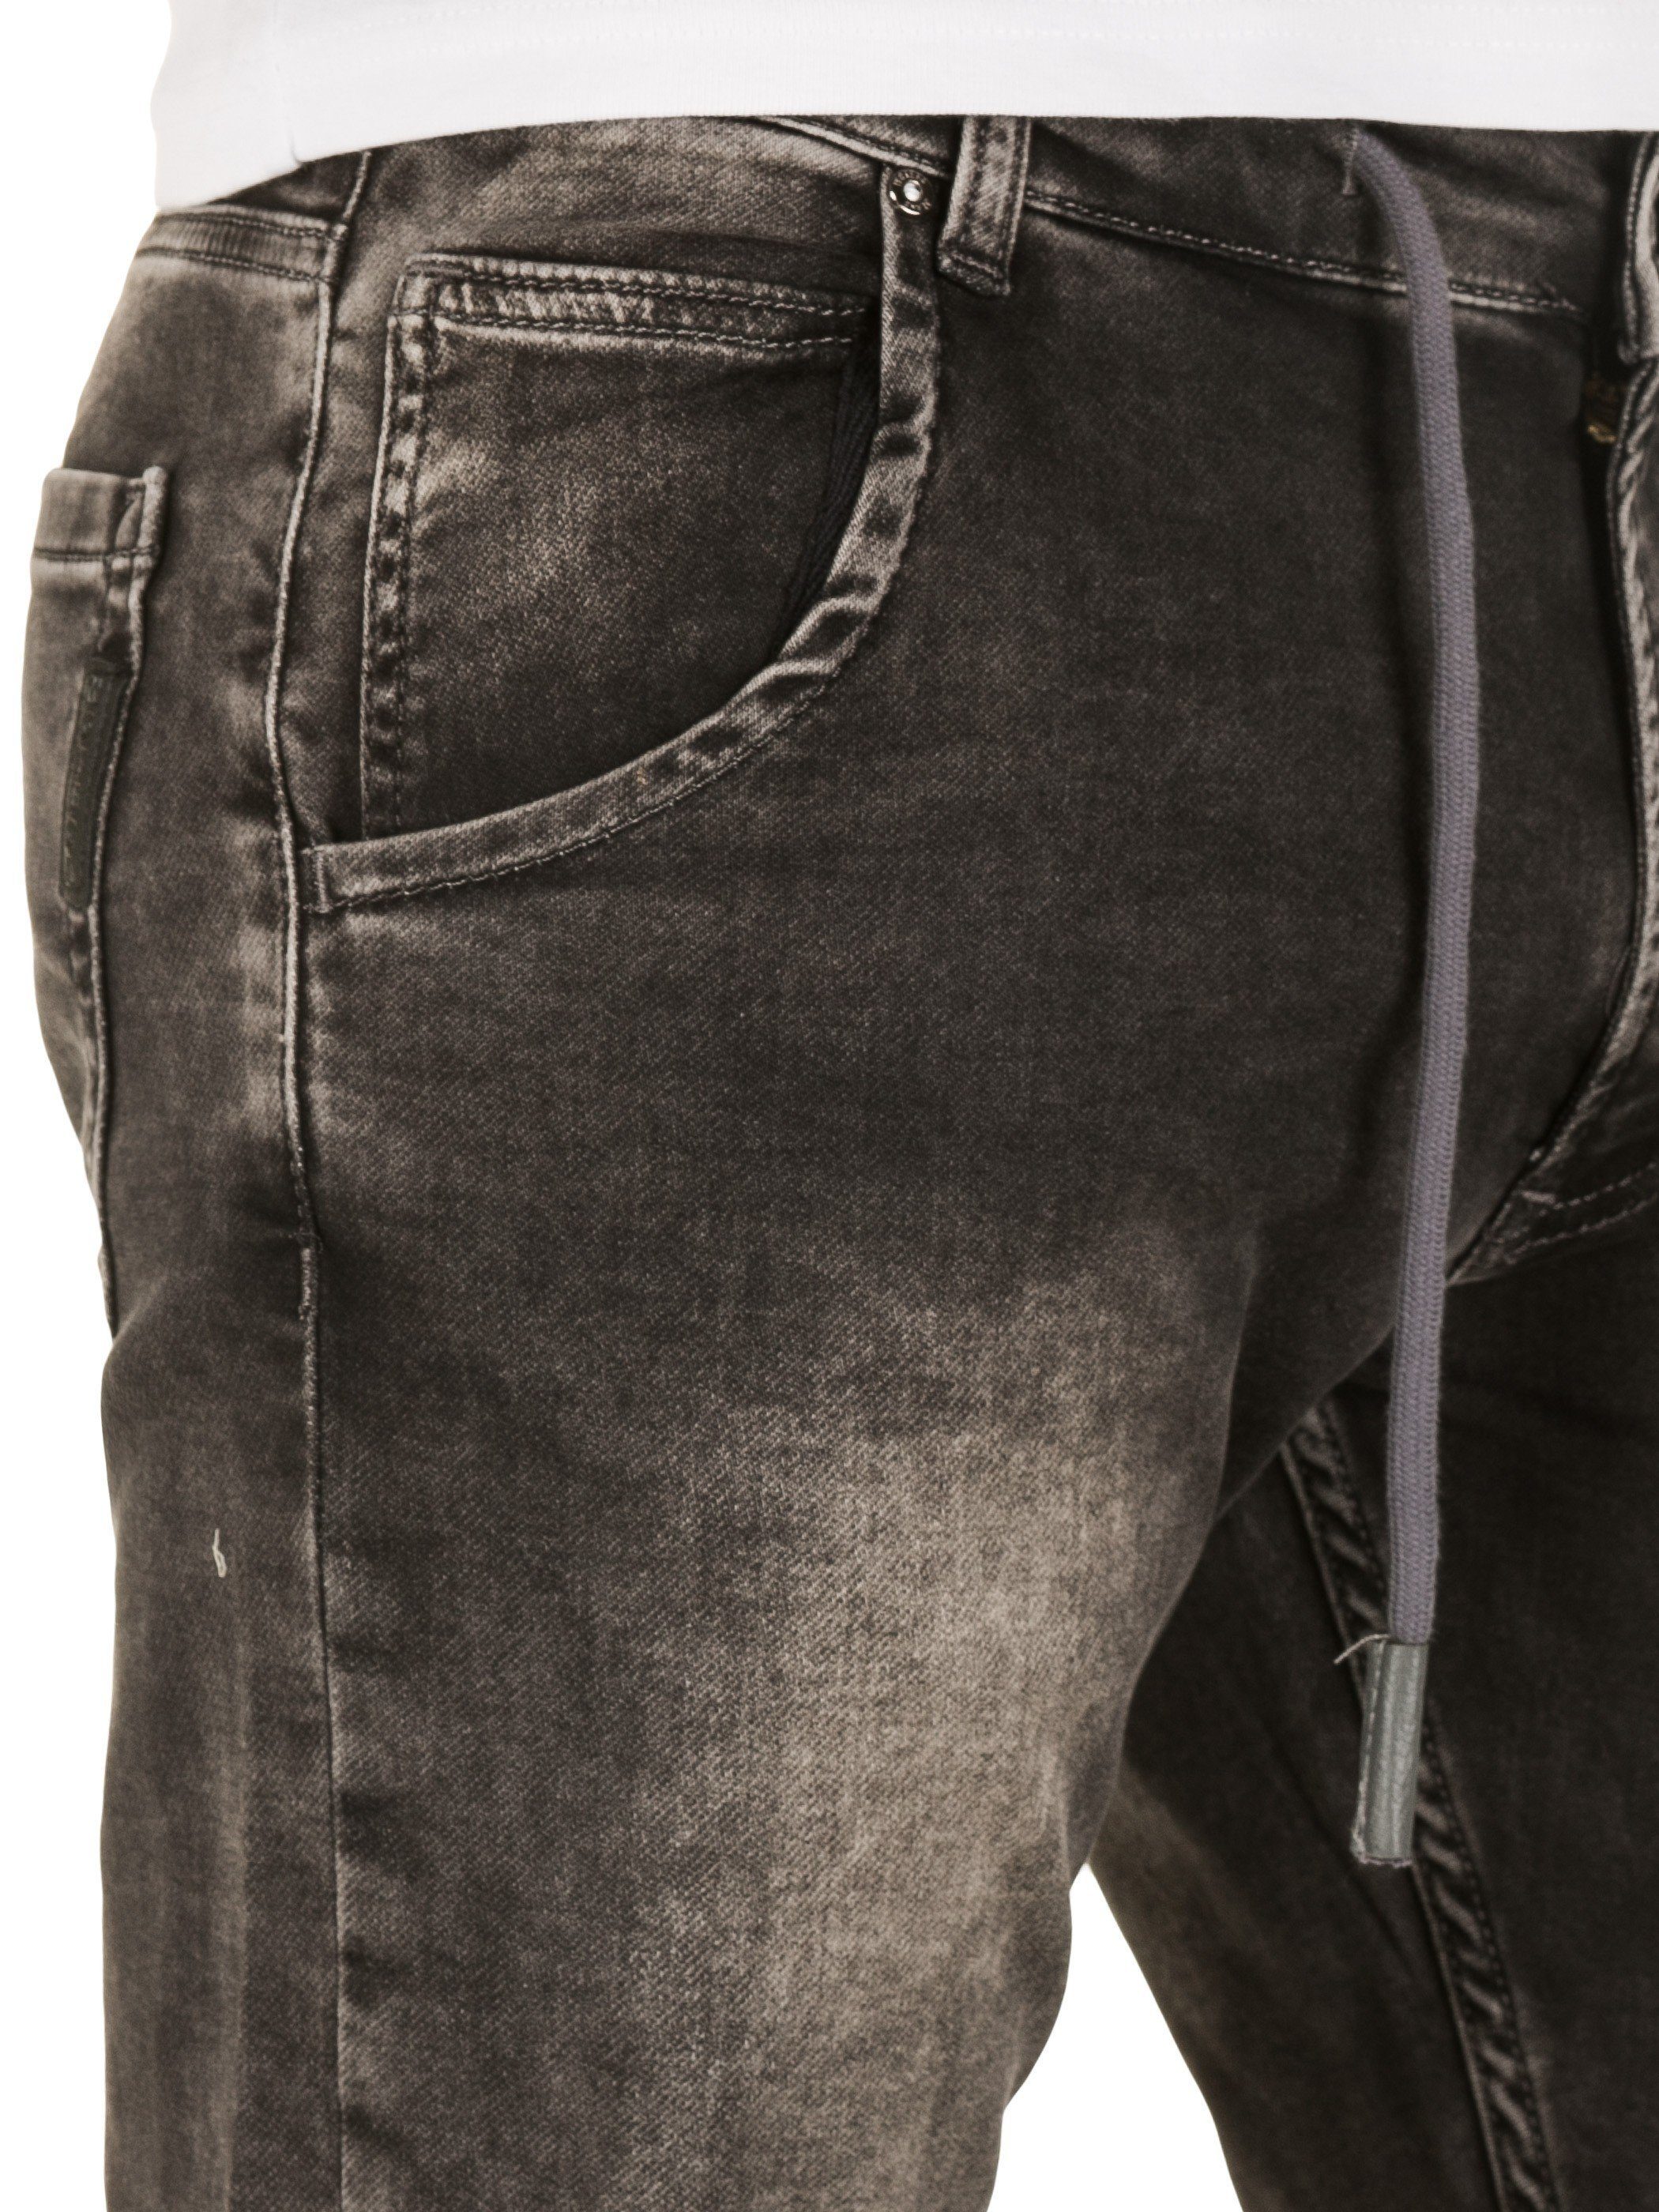 WOTEGA Slim-fit-Jeans Herren Jogginghose Joshua Jogging Jeans-Look (raven Denim Grau in Stretch 19000) Sweathosen Hose Jeans in grey